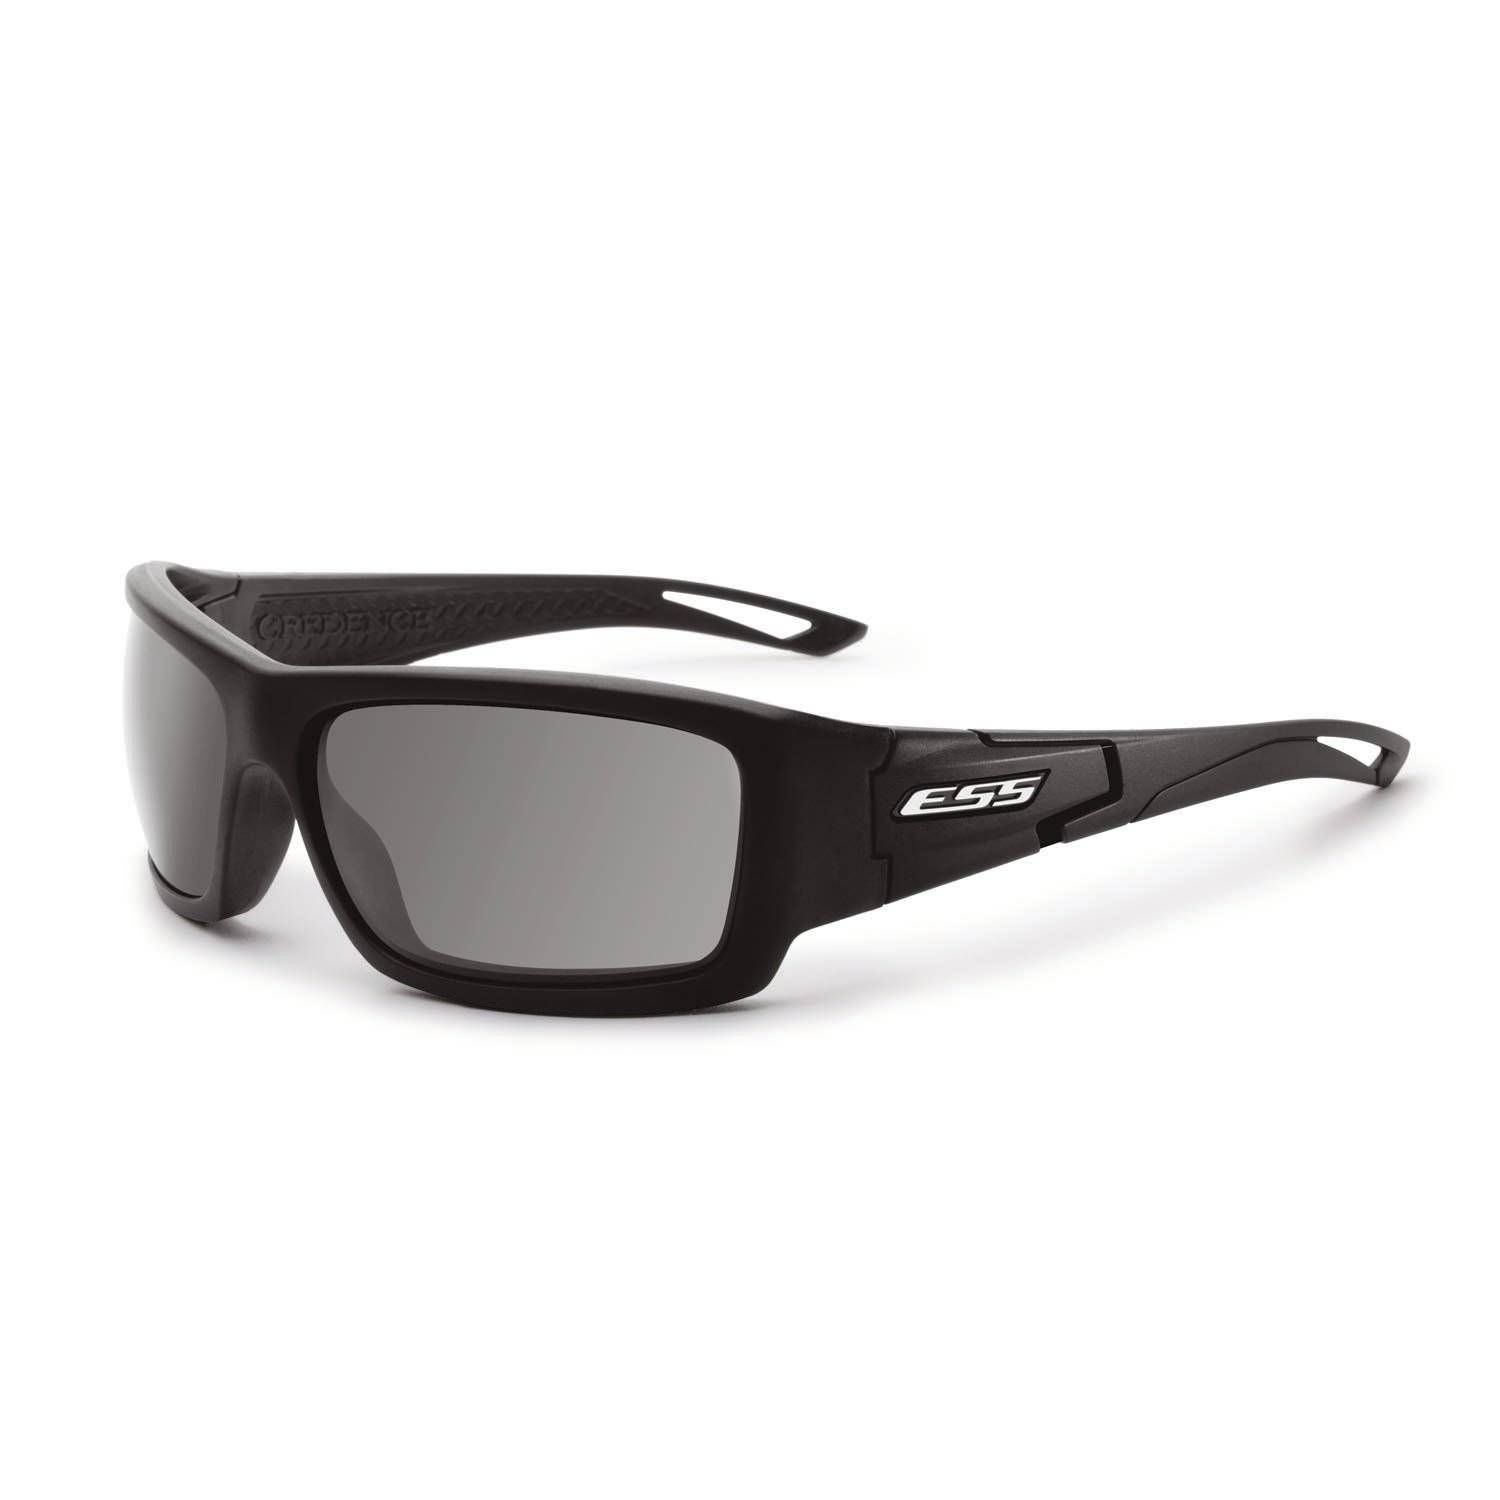 ESS Credence Black Sunglasses with Smoke Grey Lenses